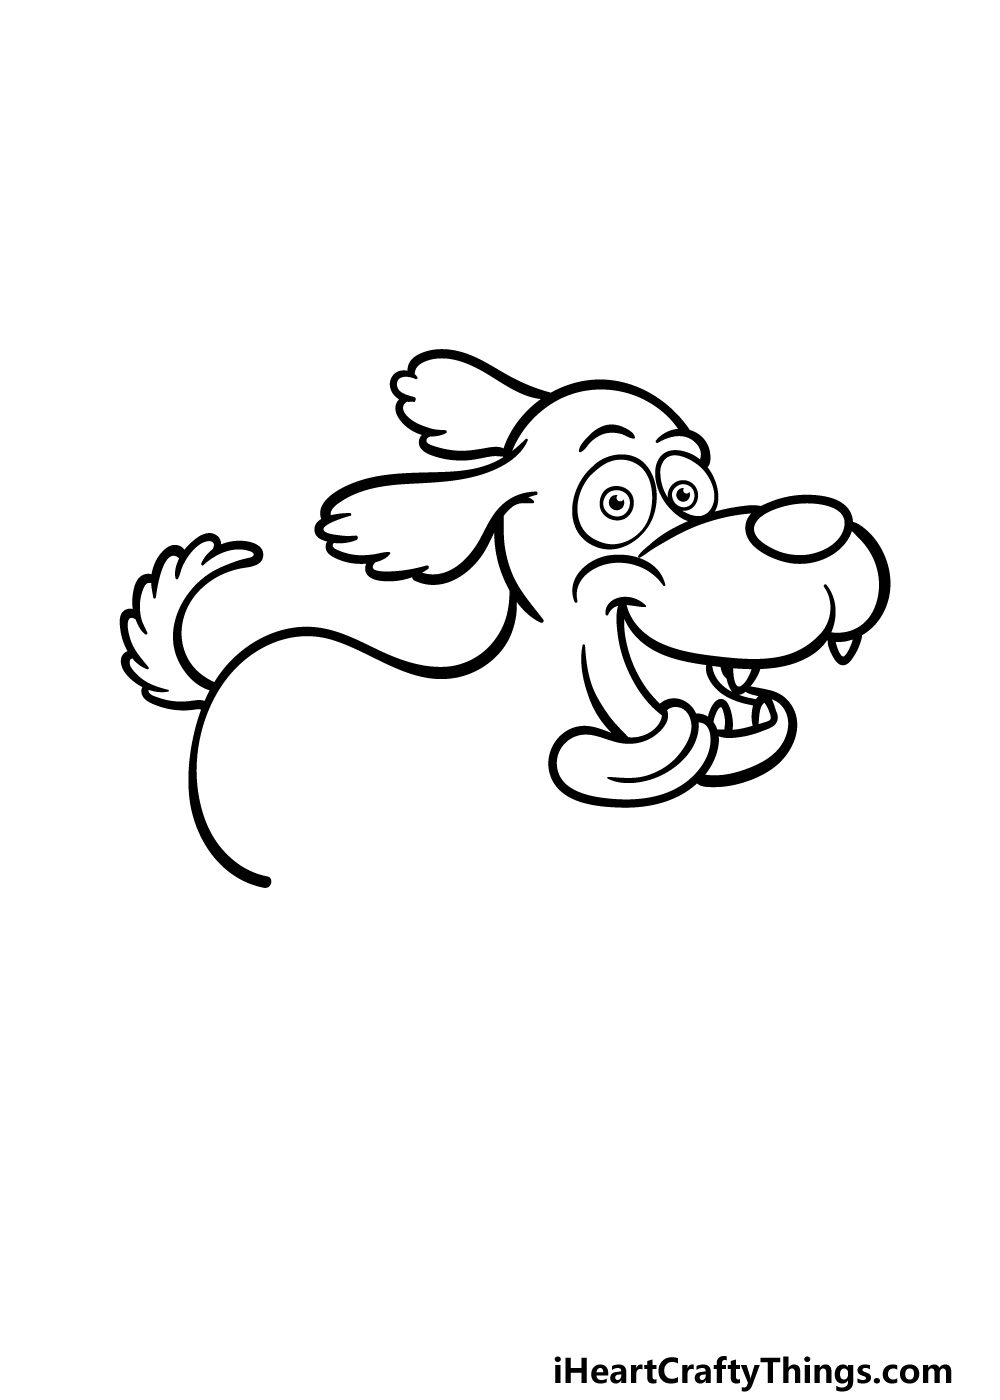 how to draw a cartoon dog step 2